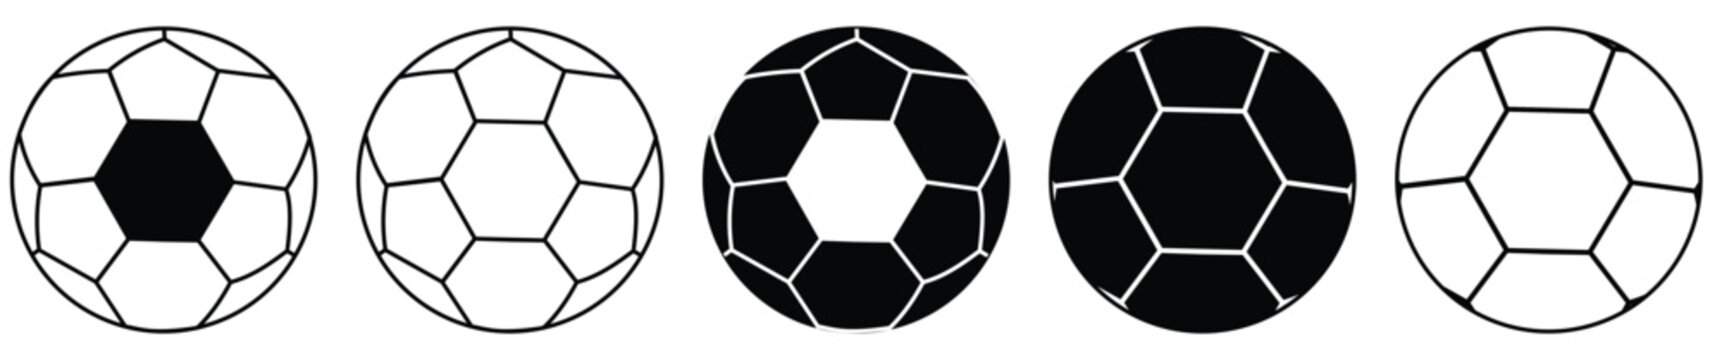 Soccer ball icon. football simple black style, Vector illustration.